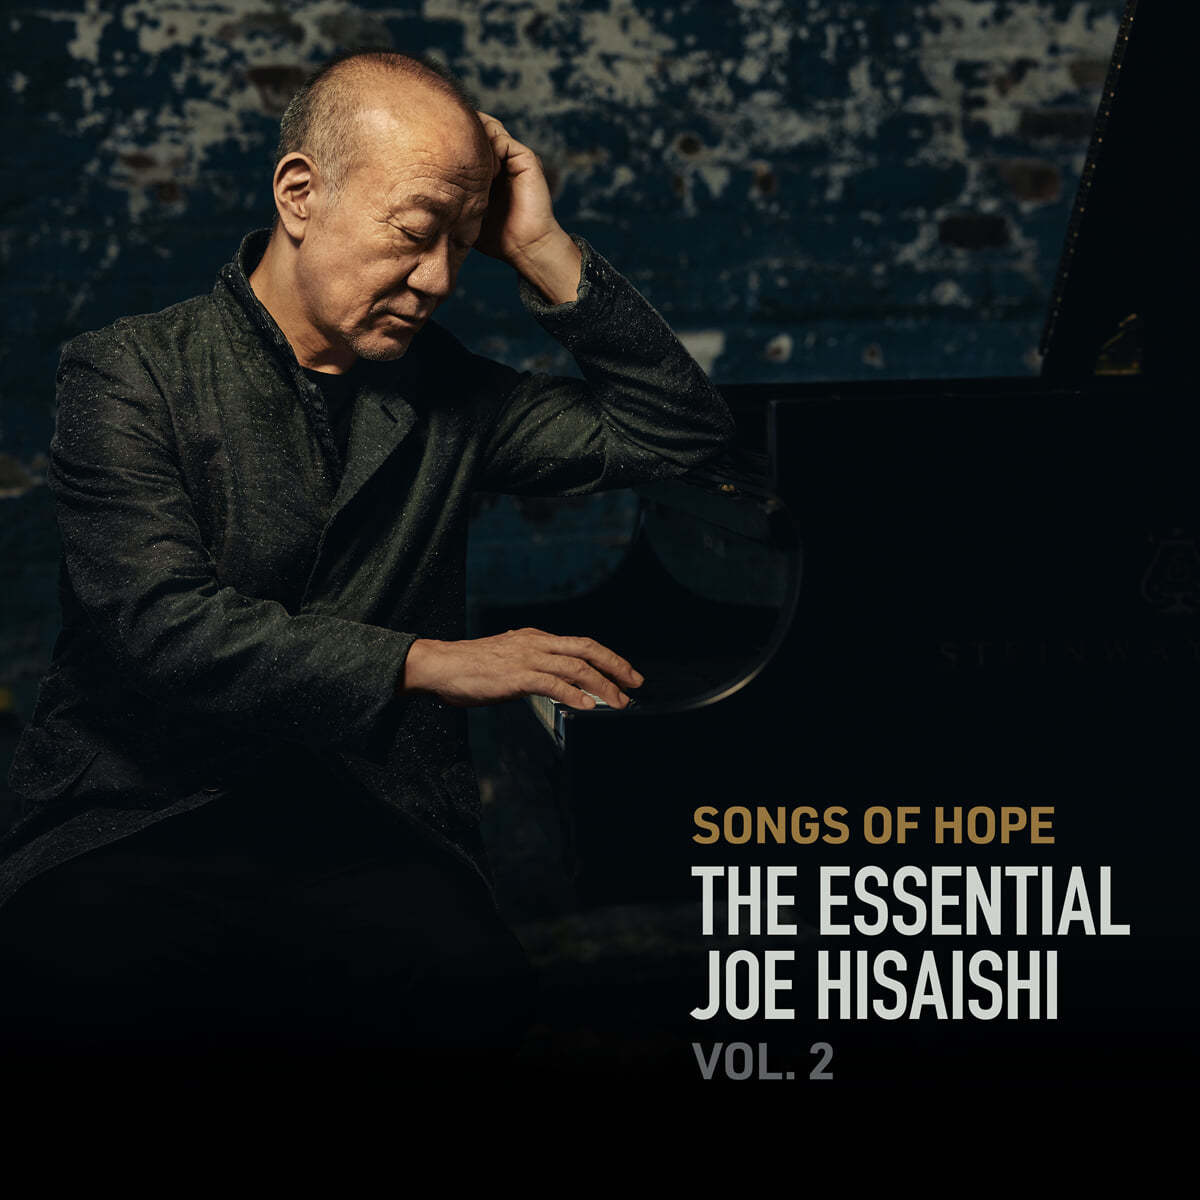 Hisaishi Joe (히사이시 조) - Songs of Hope: The Essential Joe Hisaishi Vol. 2  